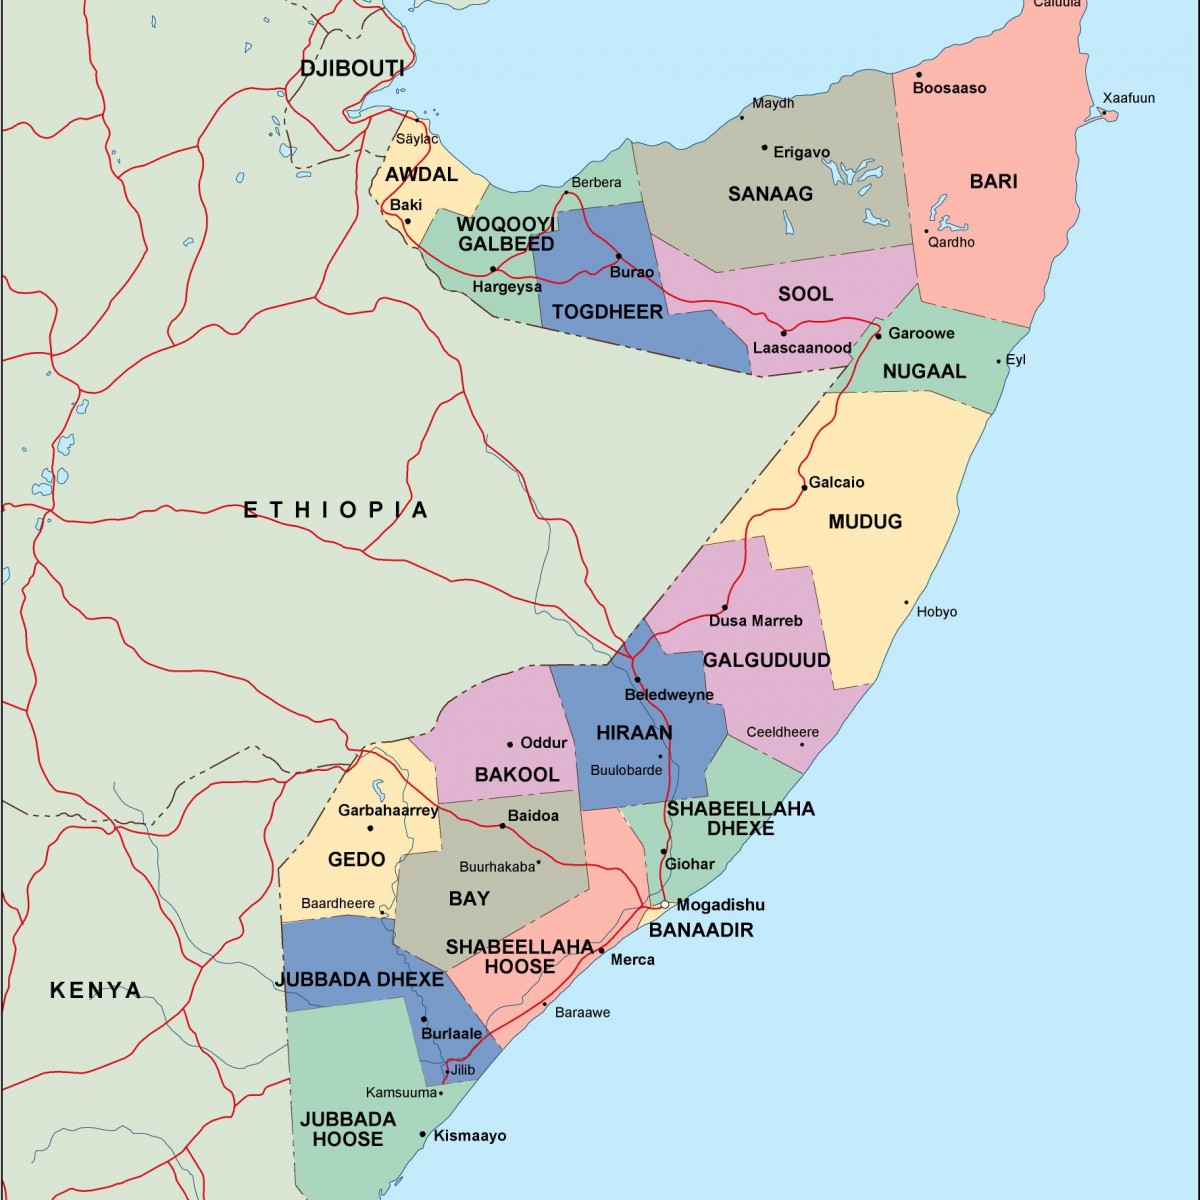 Somalia Political Map 1200x1200 